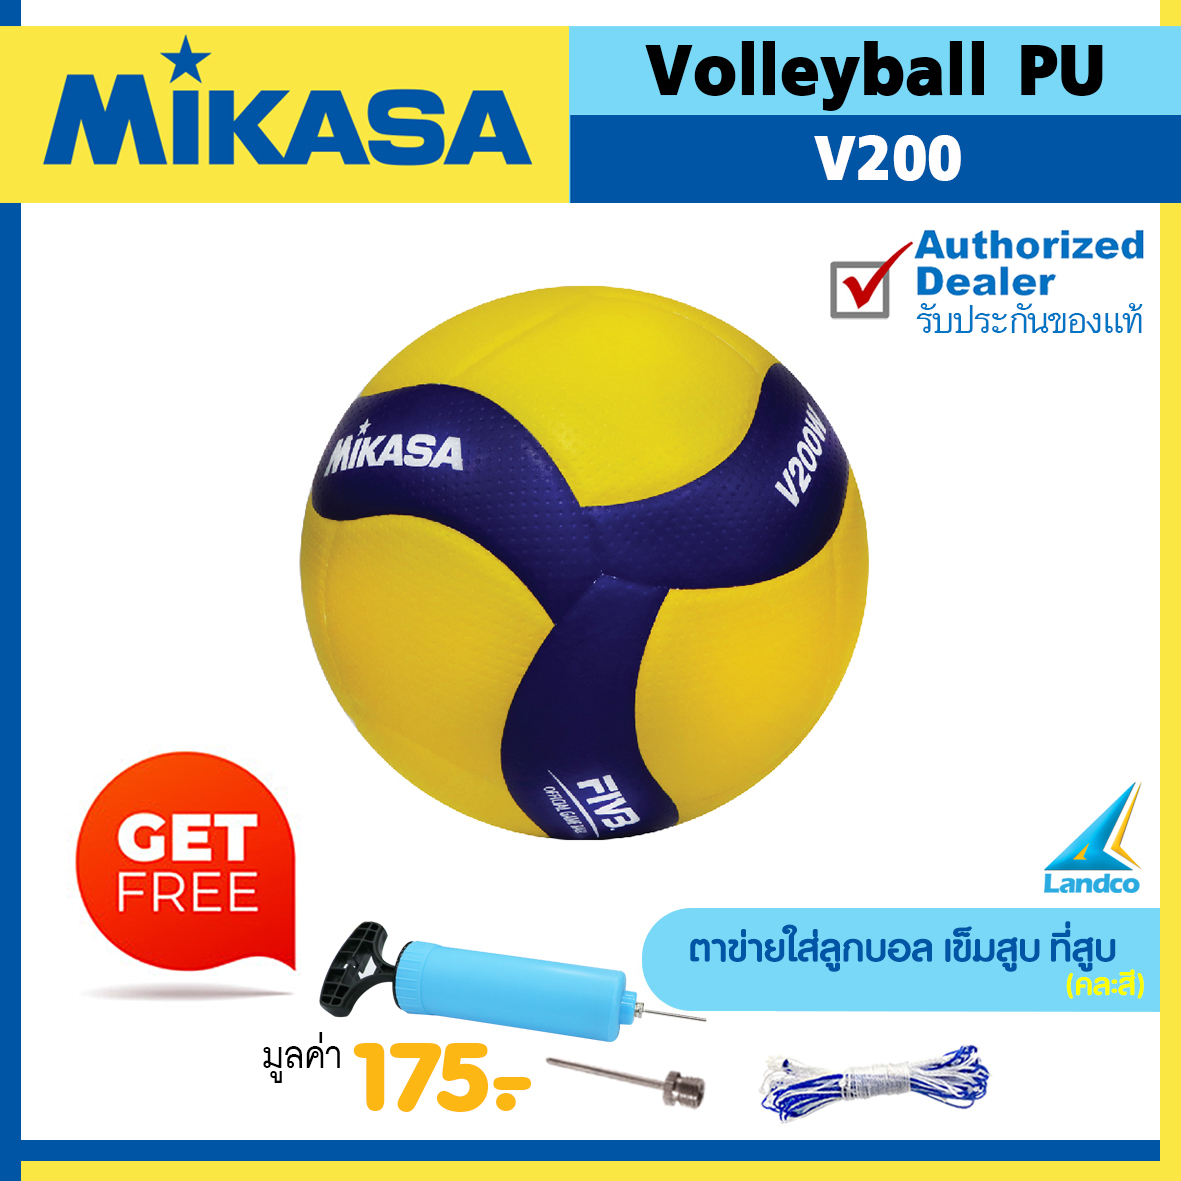 MIKASA ลูกวอลเลย์บอลหนังอัด Volleyball V200 / V300 / V320 / V330 / V390 เบอร์ 5 (แถมฟรี ตาข่ายใส่ลูกบอล + เข็มสูบ + สูบลมมือ SPL)